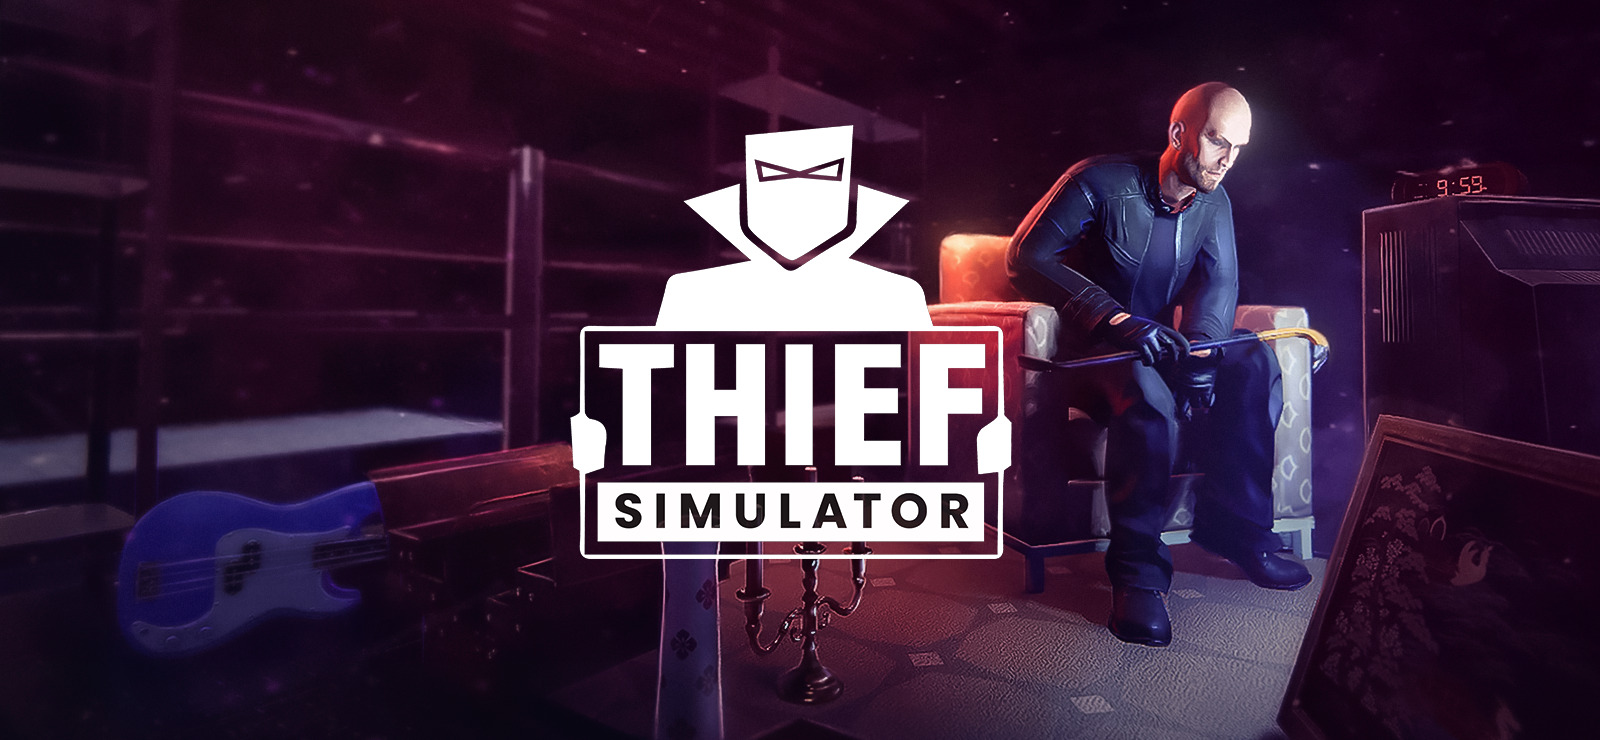 thief simulator download windows 10